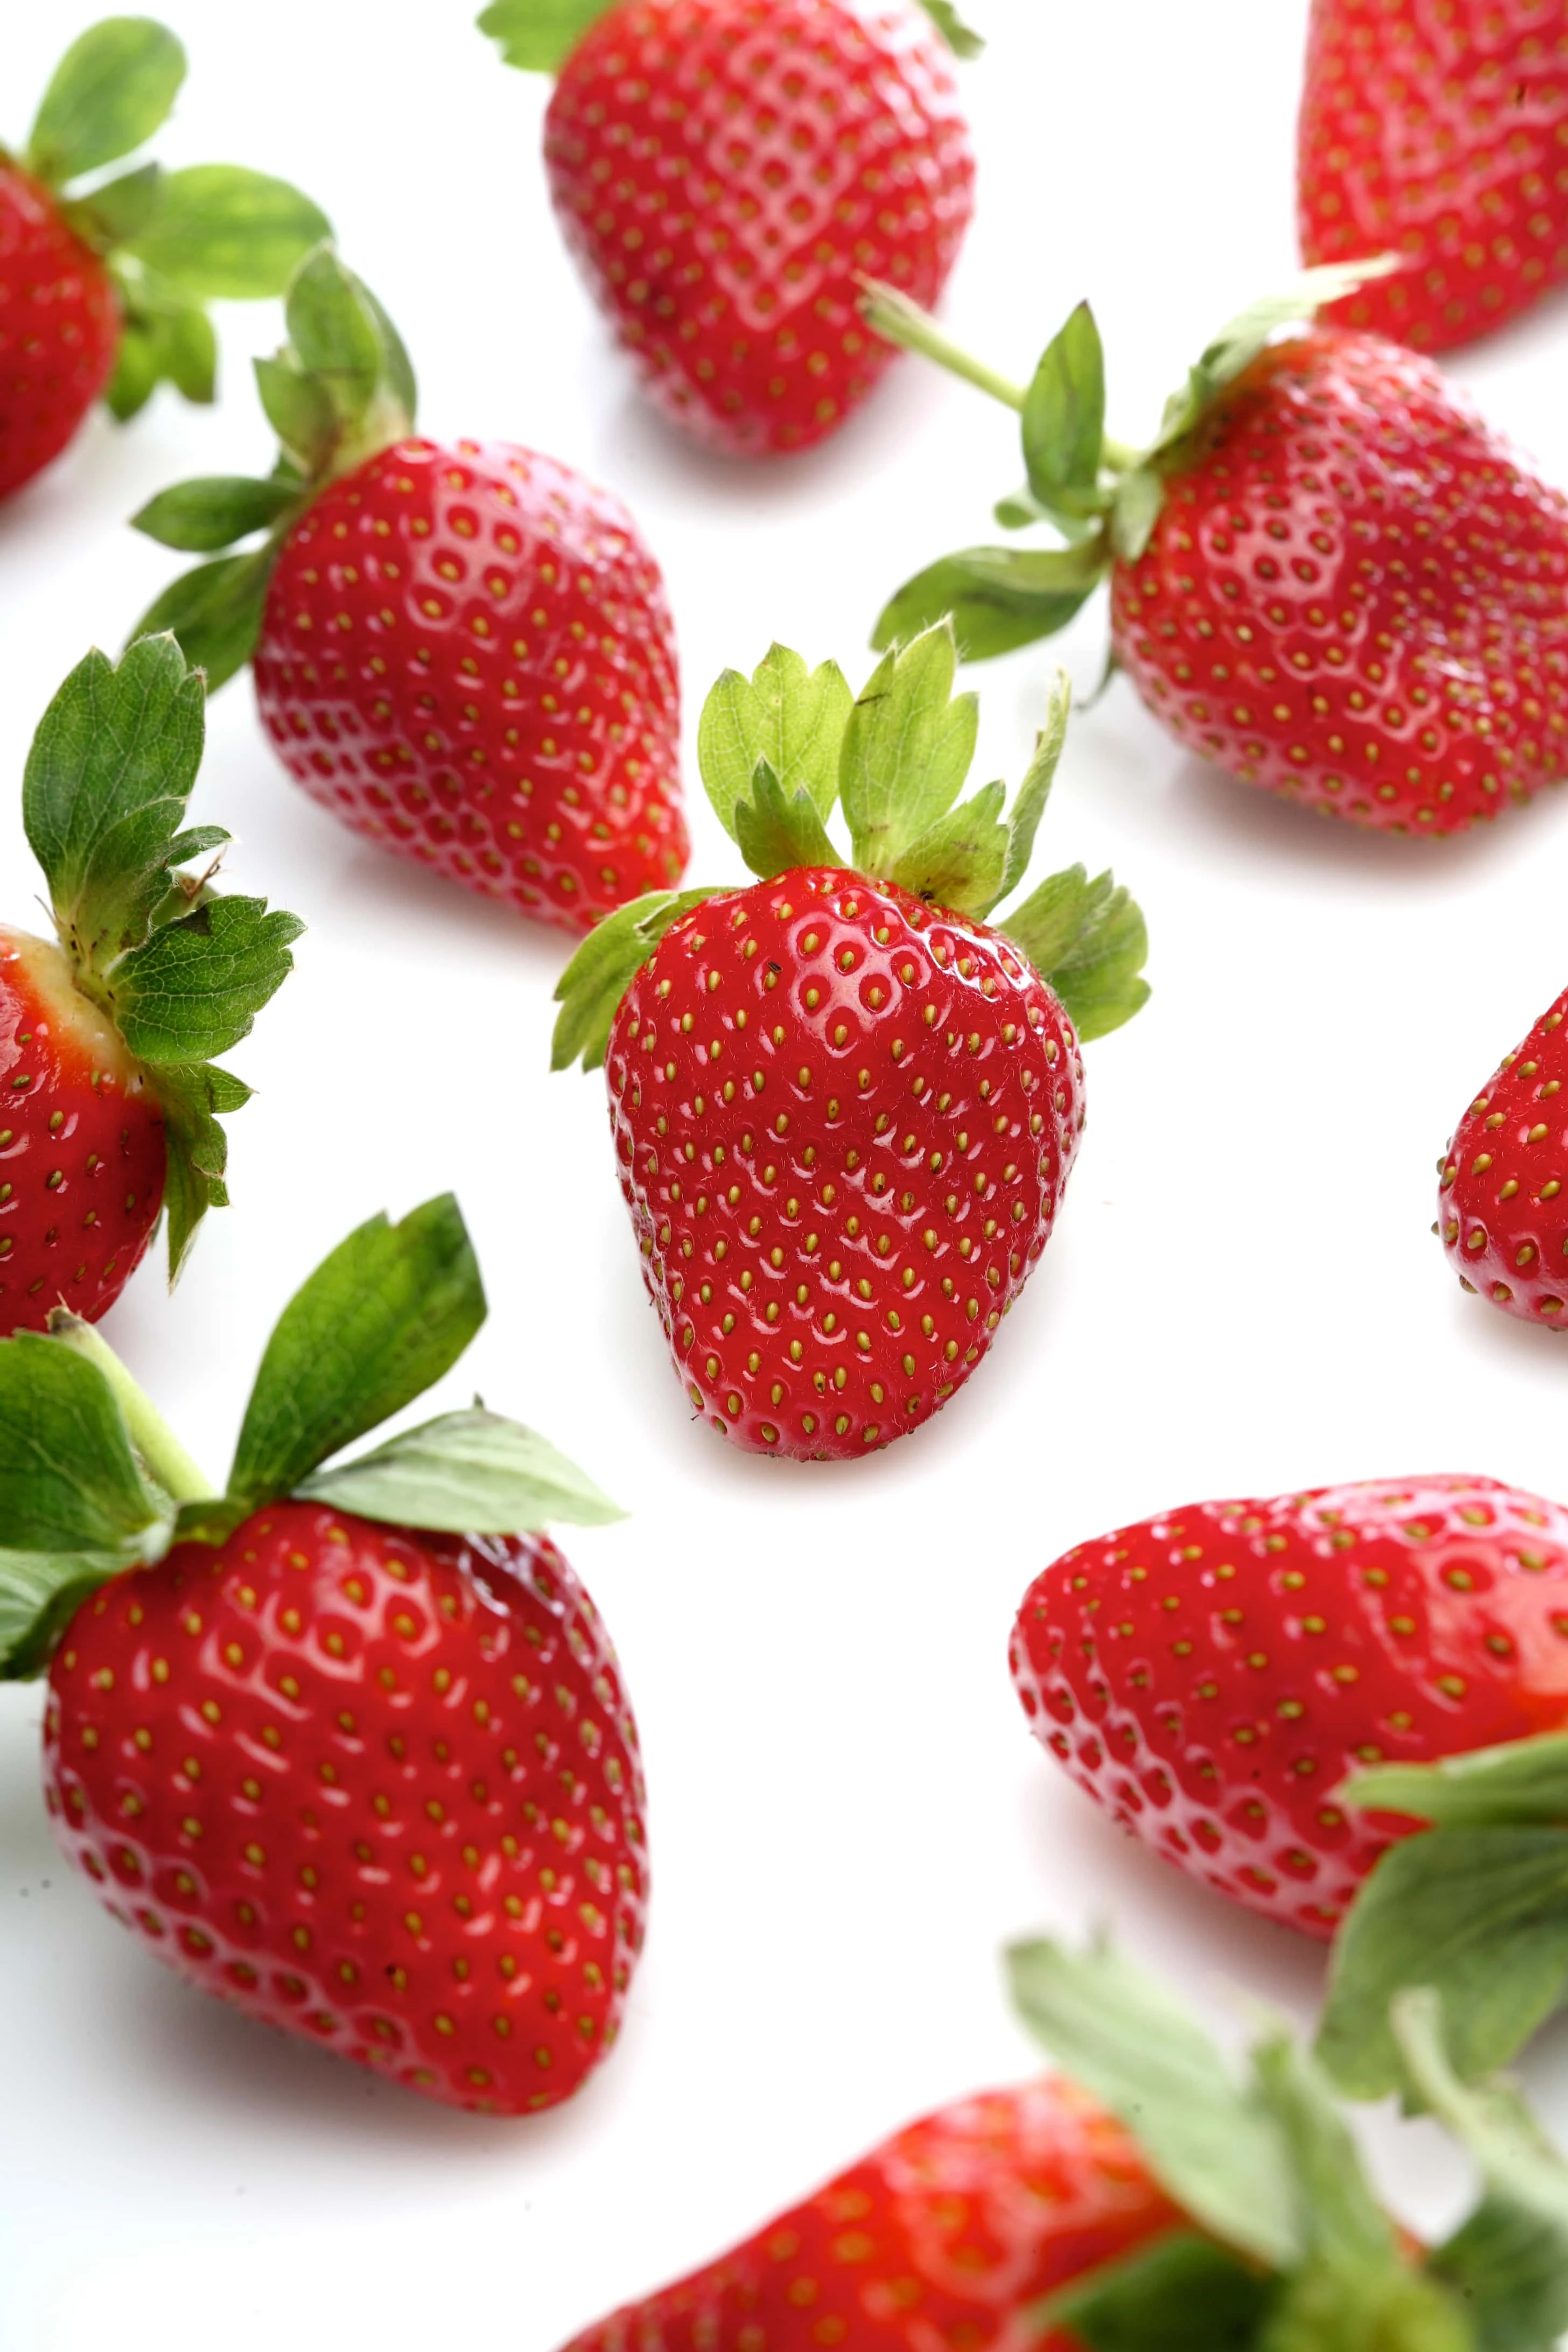 Strawberry on white background - close-up